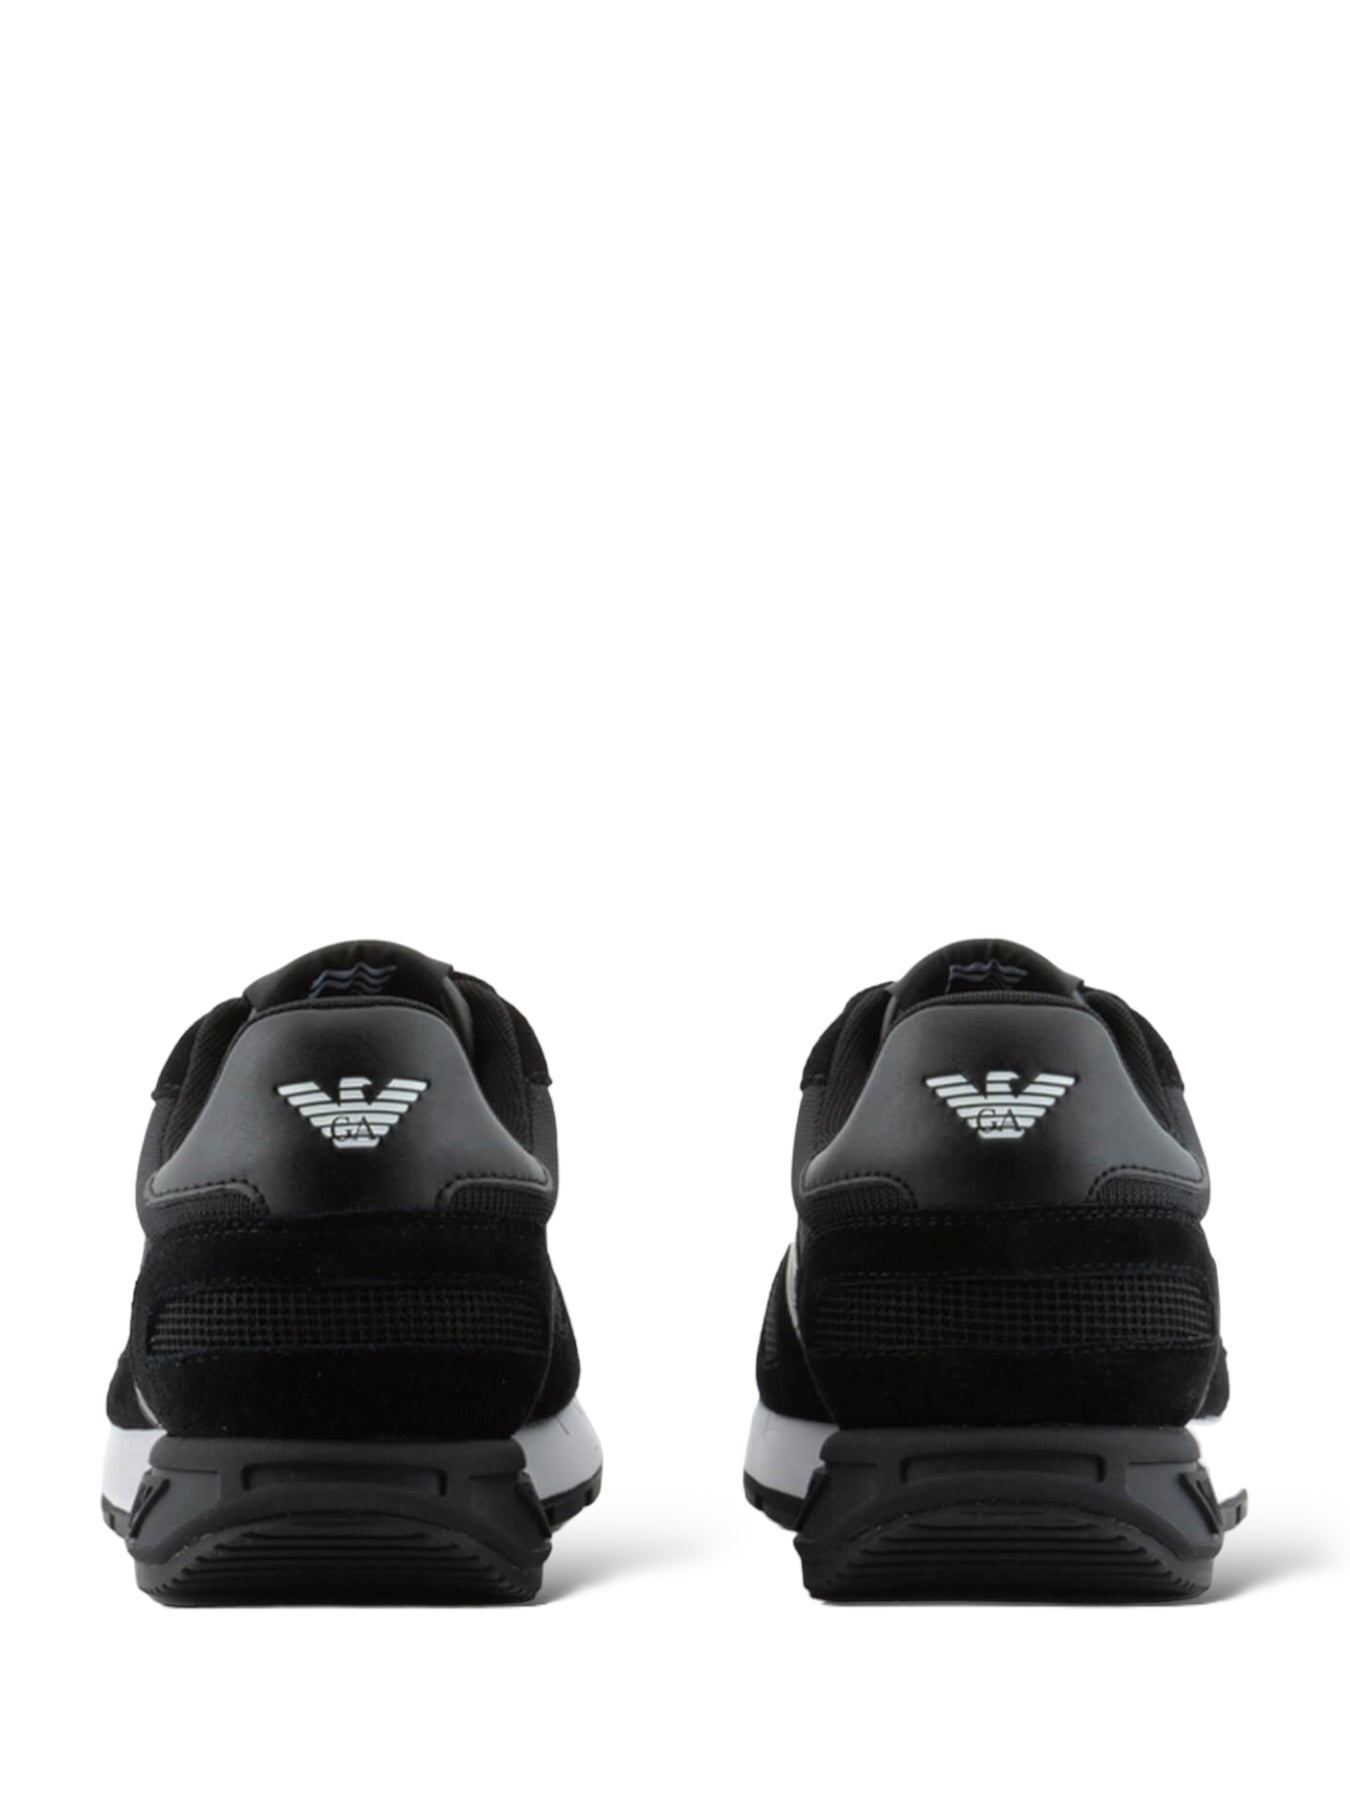 Ea7 Emporio Armani Sneakers X8x151 Black+white